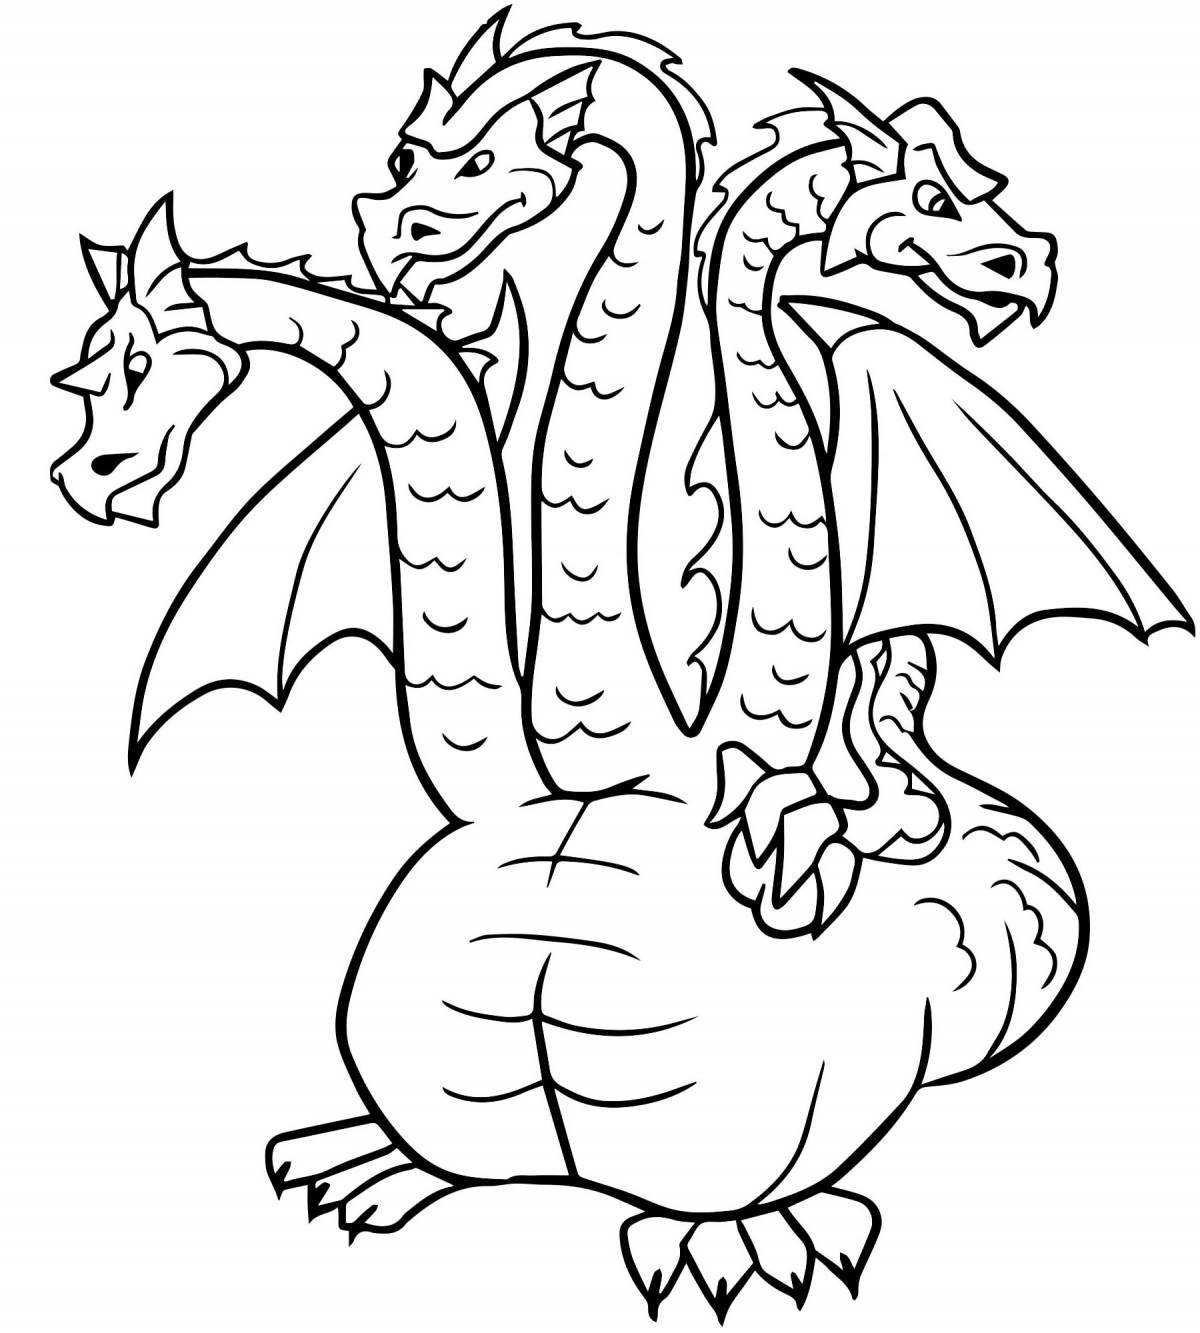 Coloring book bright three-headed dragon